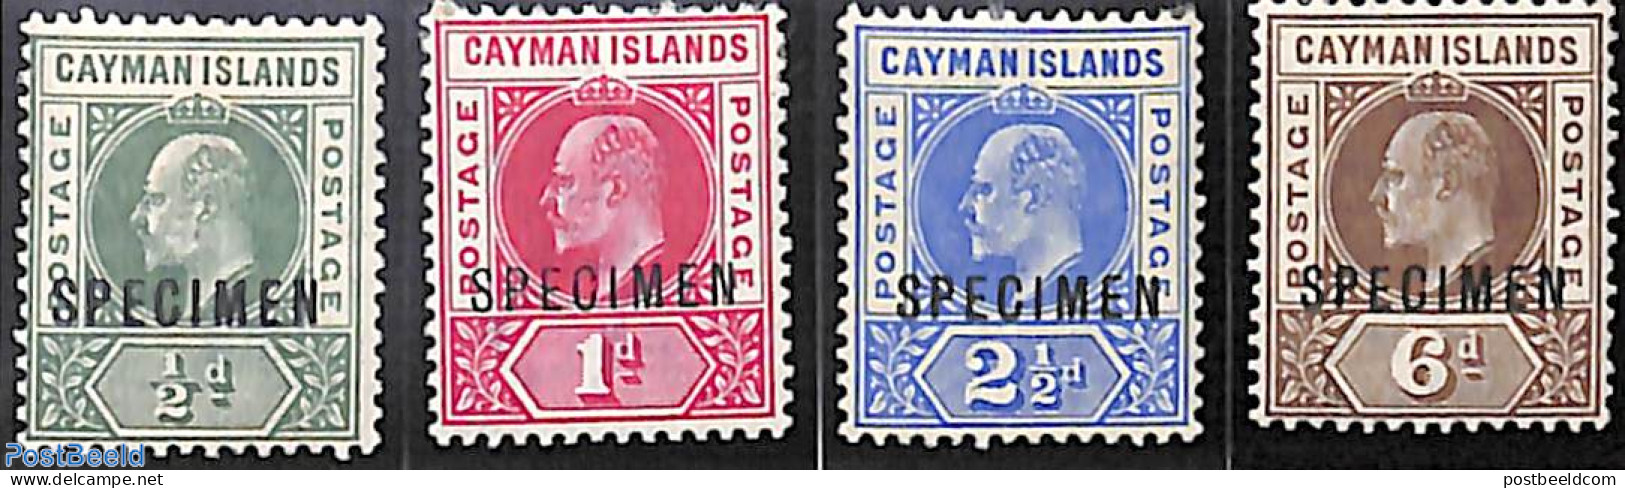 Cayman Islands 1901 Definitives, King Edward VII 4v, SPECIMEN, Unused (hinged) - Caimán (Islas)